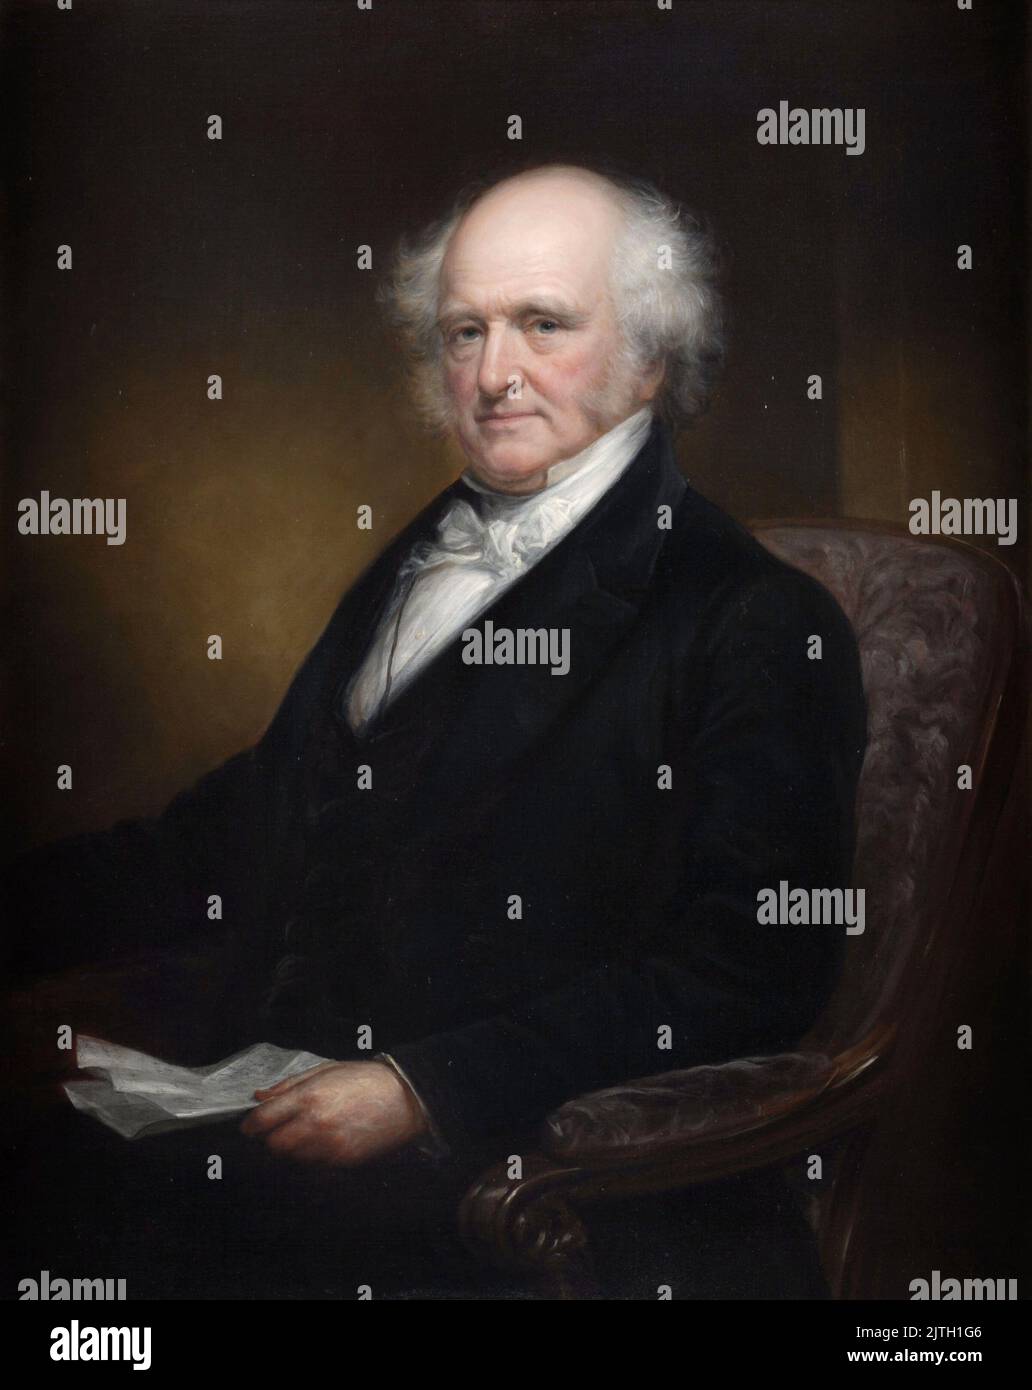 Gubernatorial portrait of Martin Van Buren by Daniel Huntington in The Civil War. Martin van Buren was the eighth president of the USA. Stock Photo